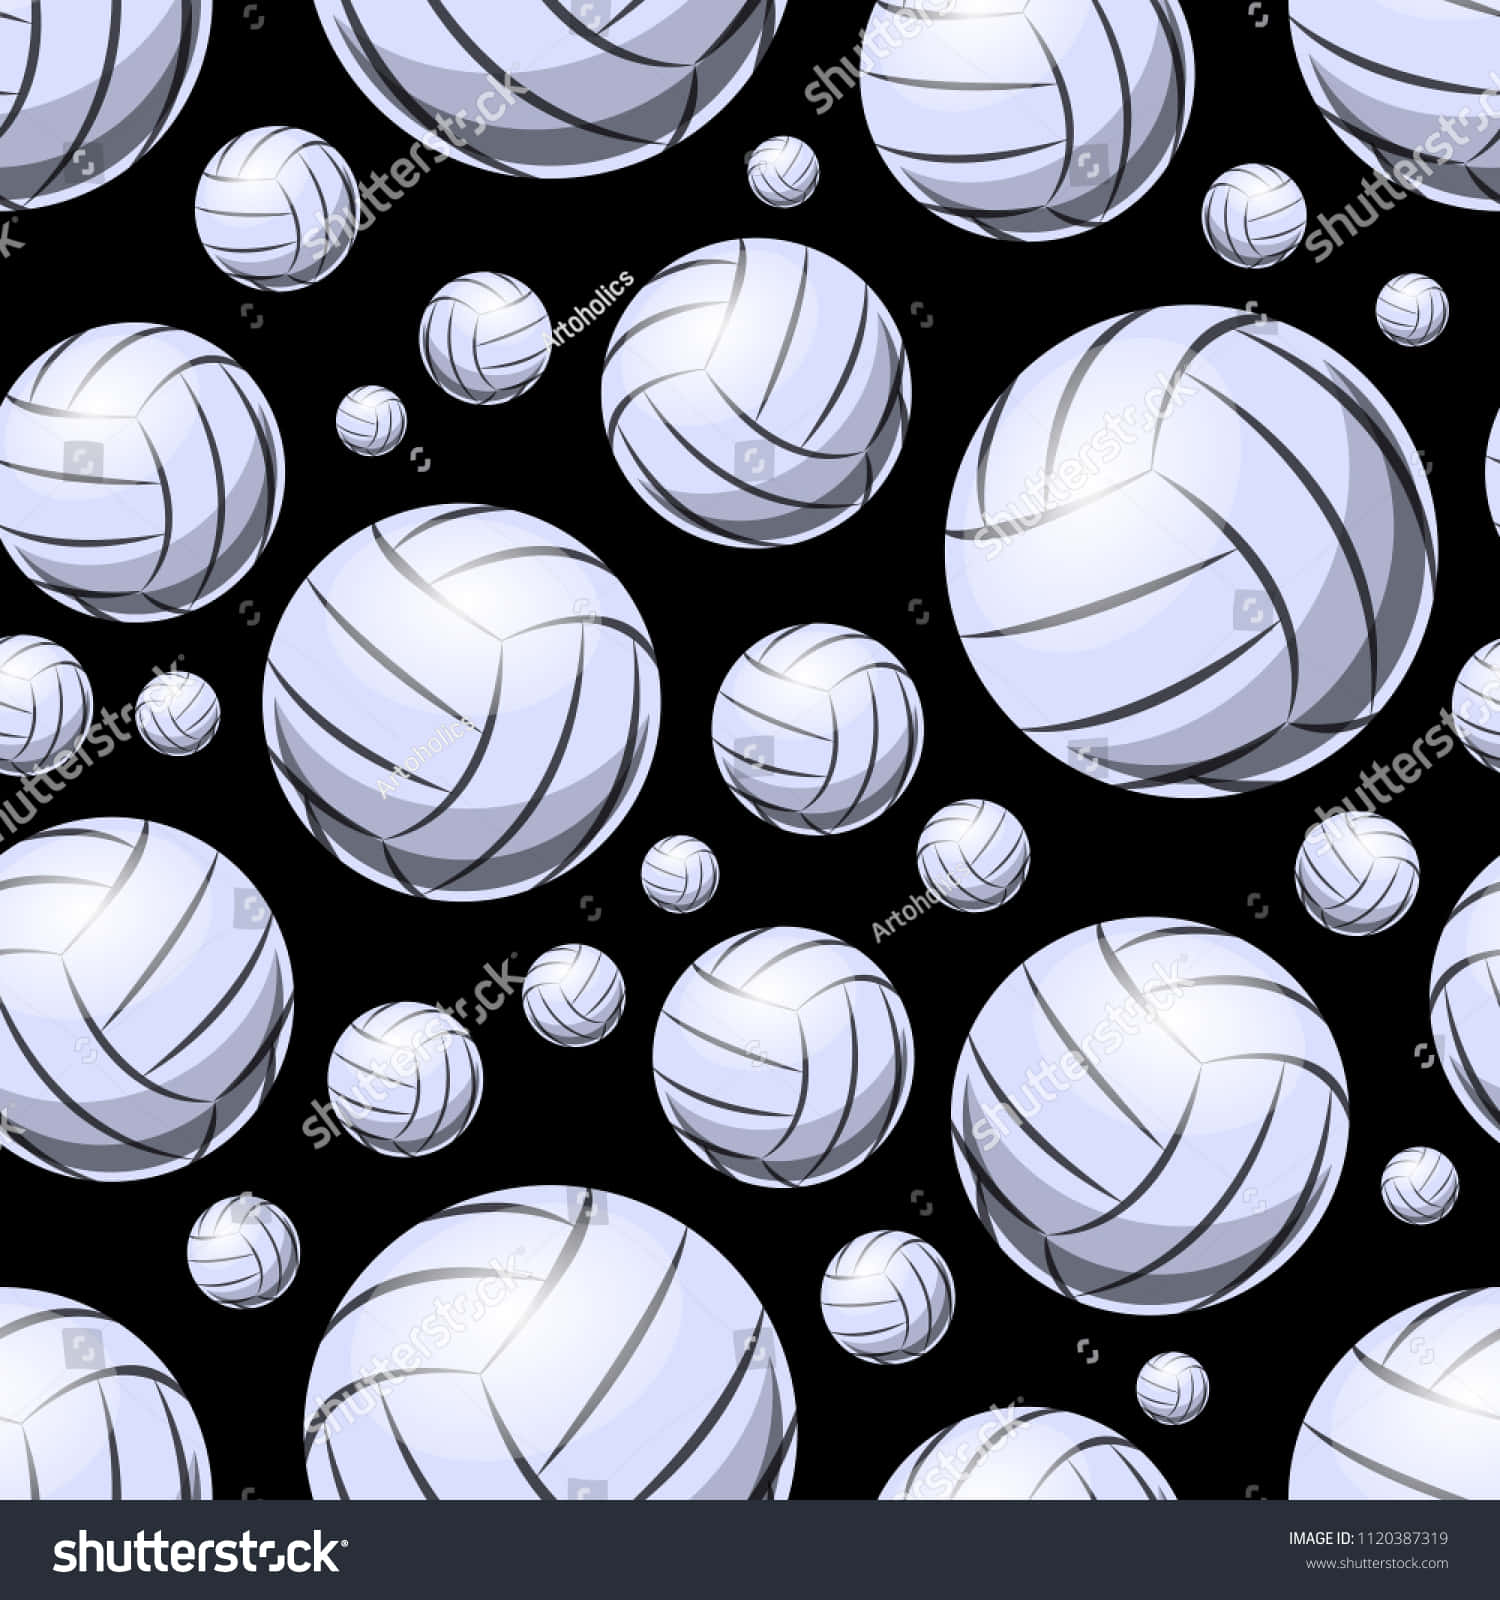 Sigtekhøjt Med Volleyball Bolden. Wallpaper